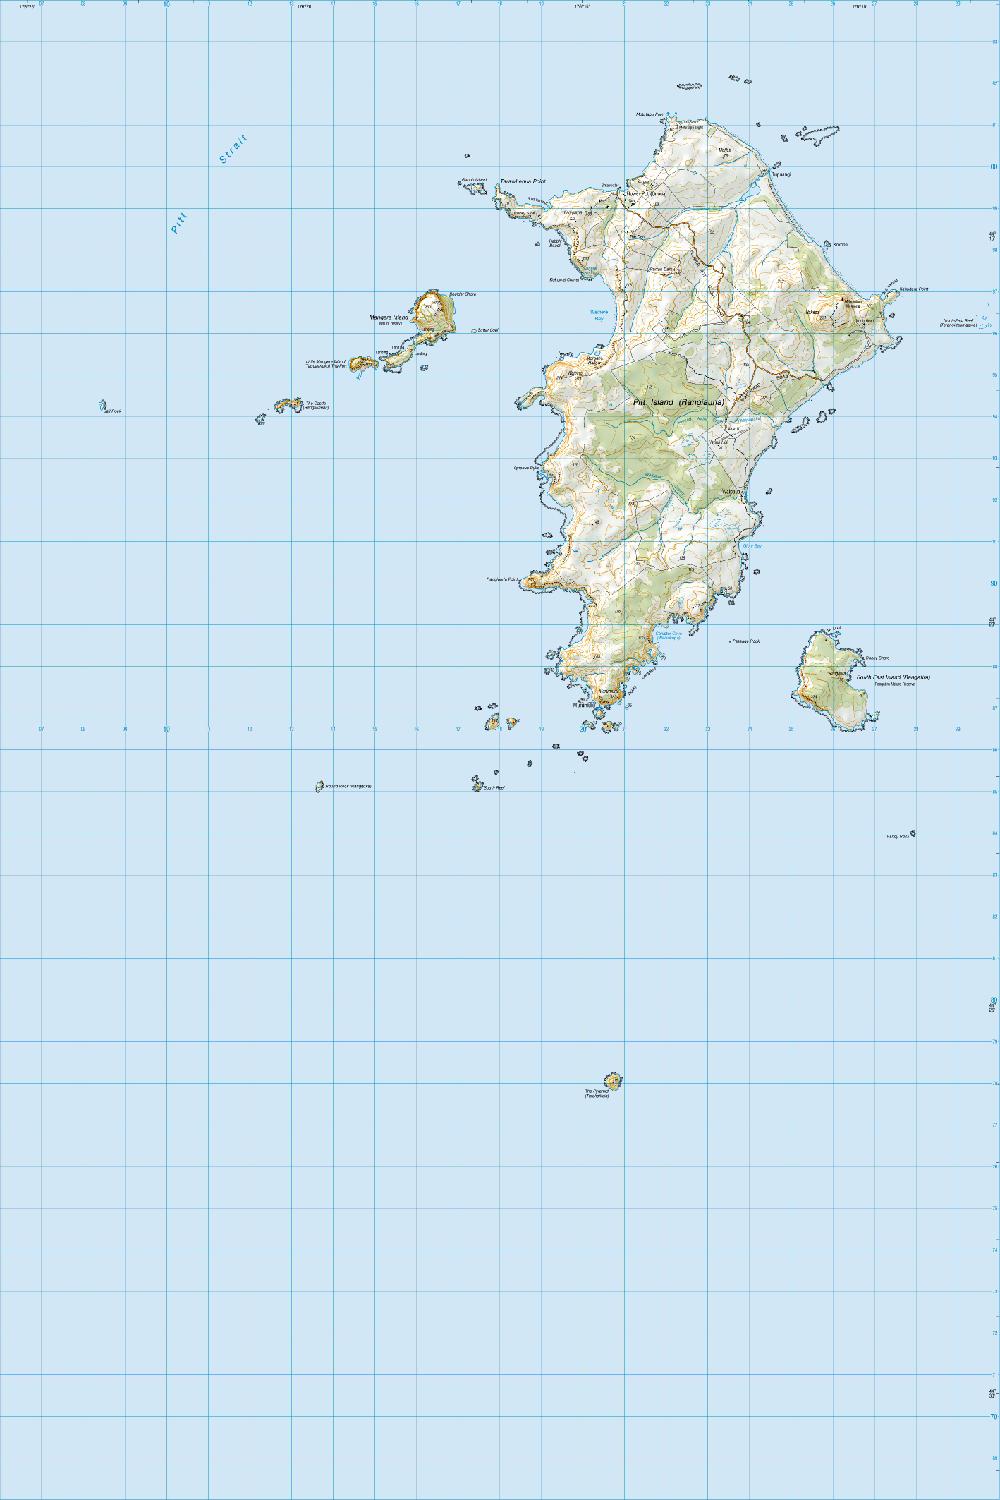 Topo map of Pitt Island (Rangiauria)